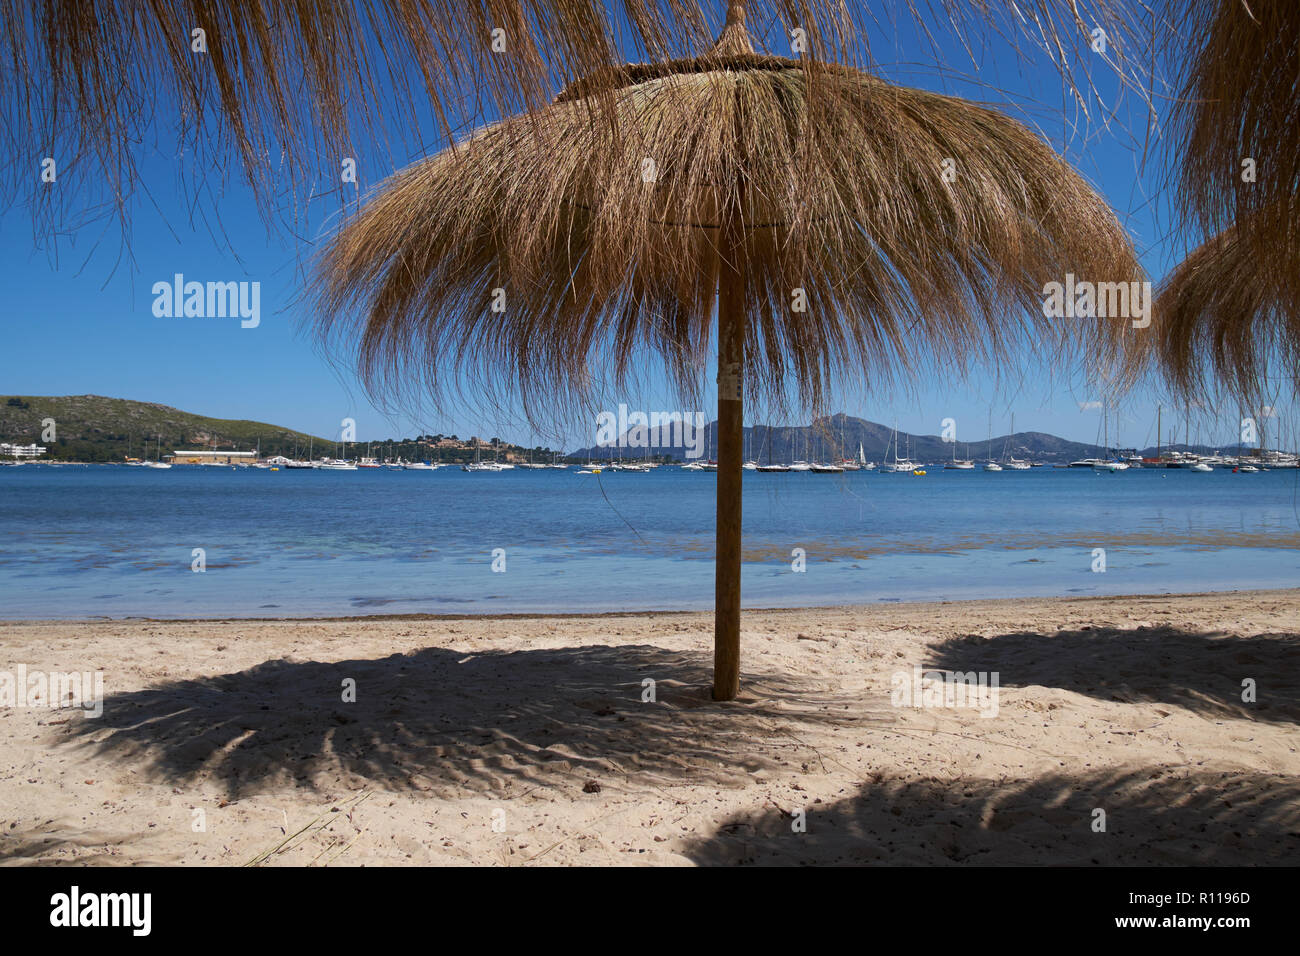 Palapa Sonnenschutz am Strand von Port de Pollenca (oder Puerto de Pollensa), Mallorca, Balearen, Spanien. Stockfoto